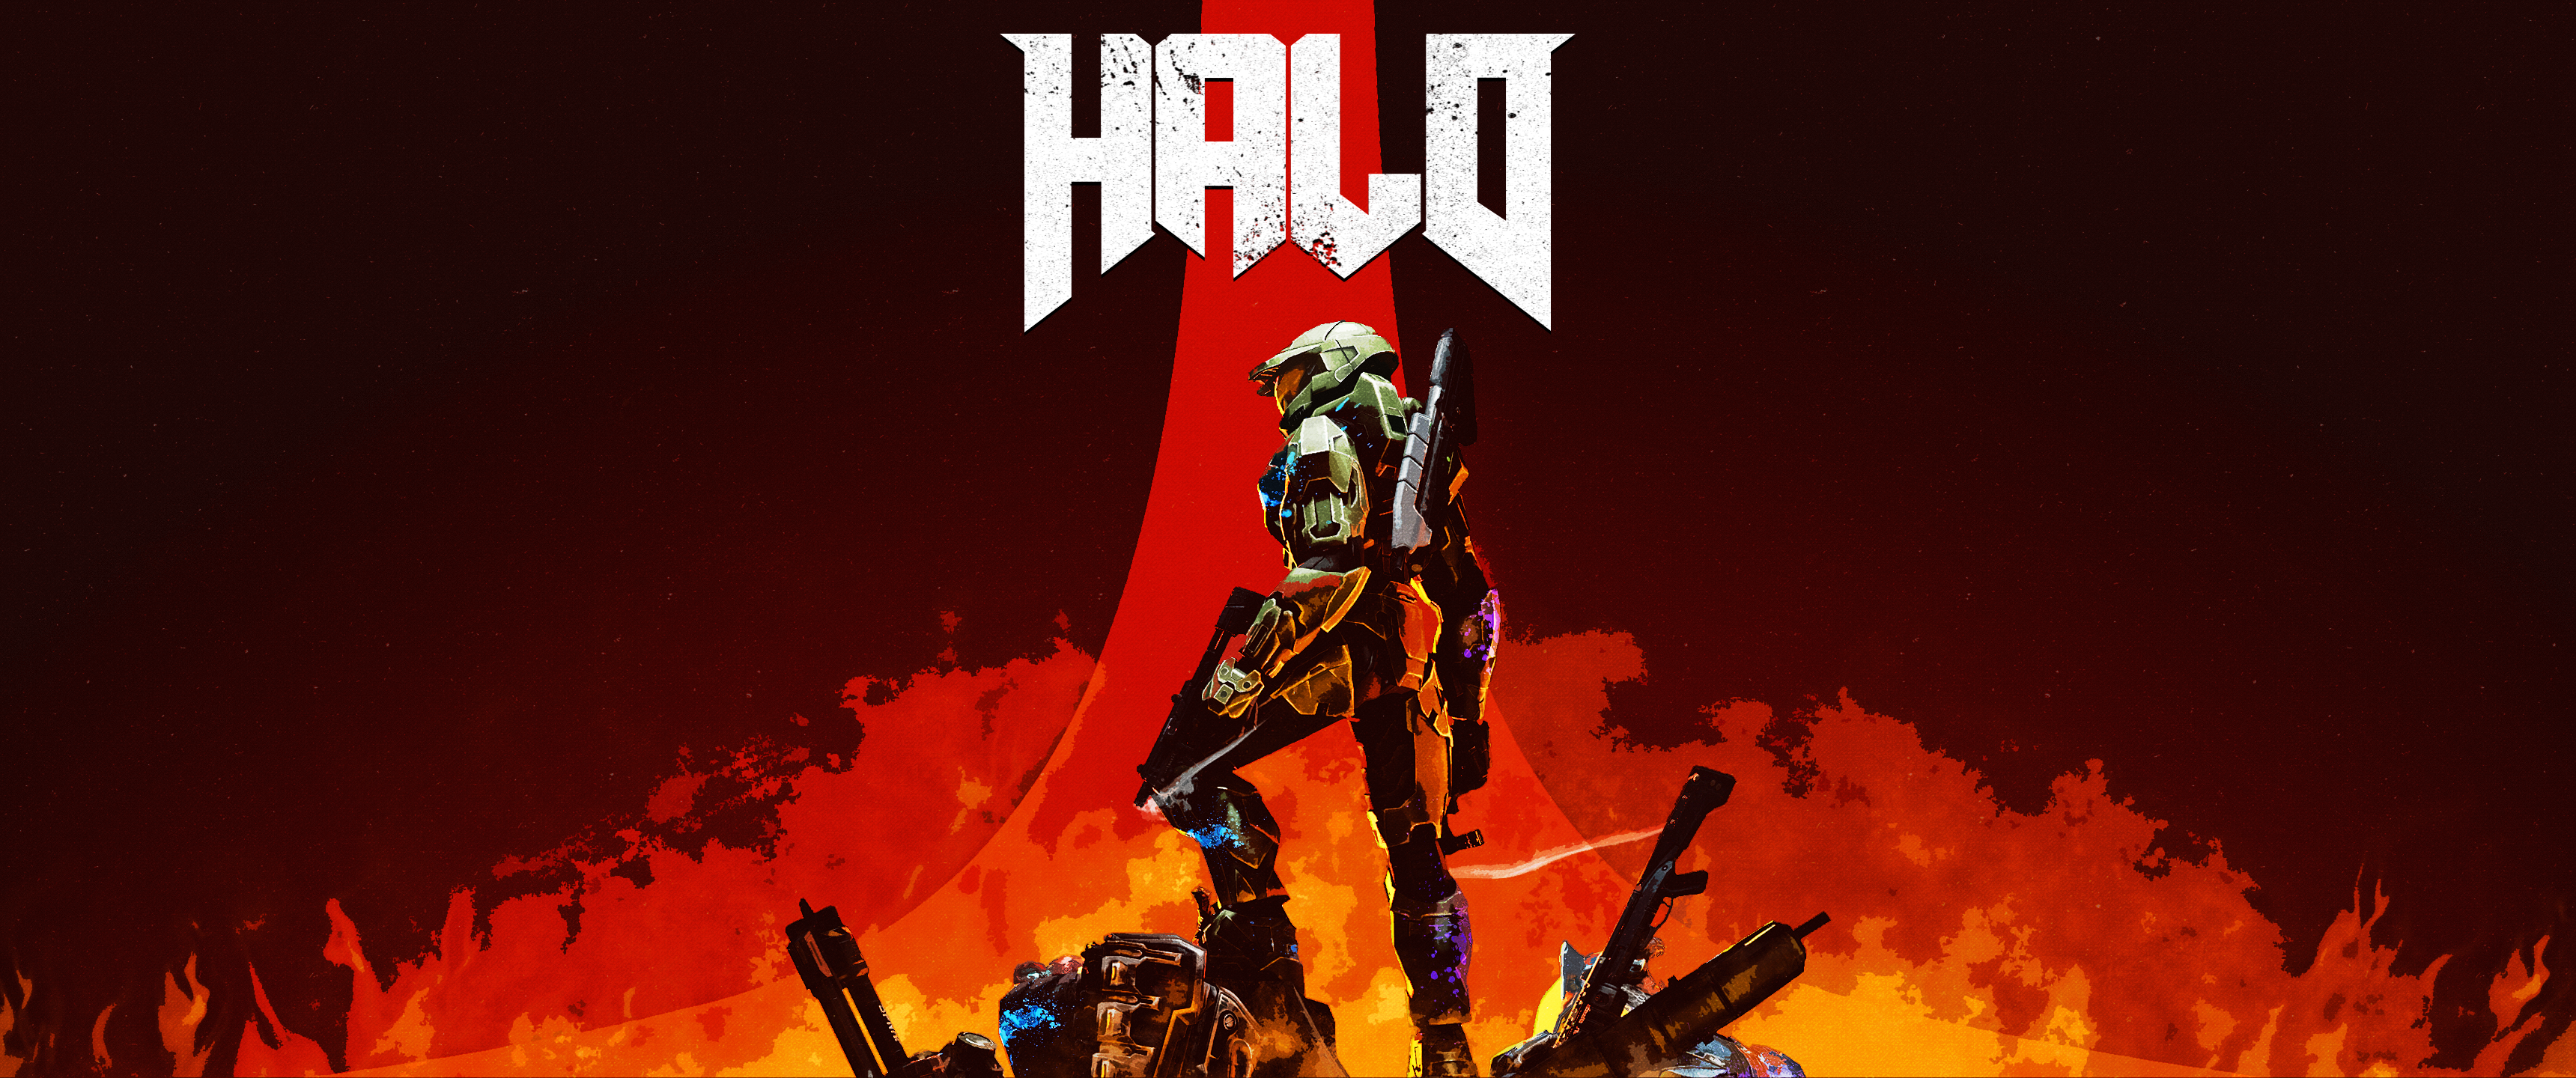 Halo x Doom wallpaper 21/9 3440x1440 by Playbox36 on DeviantArt